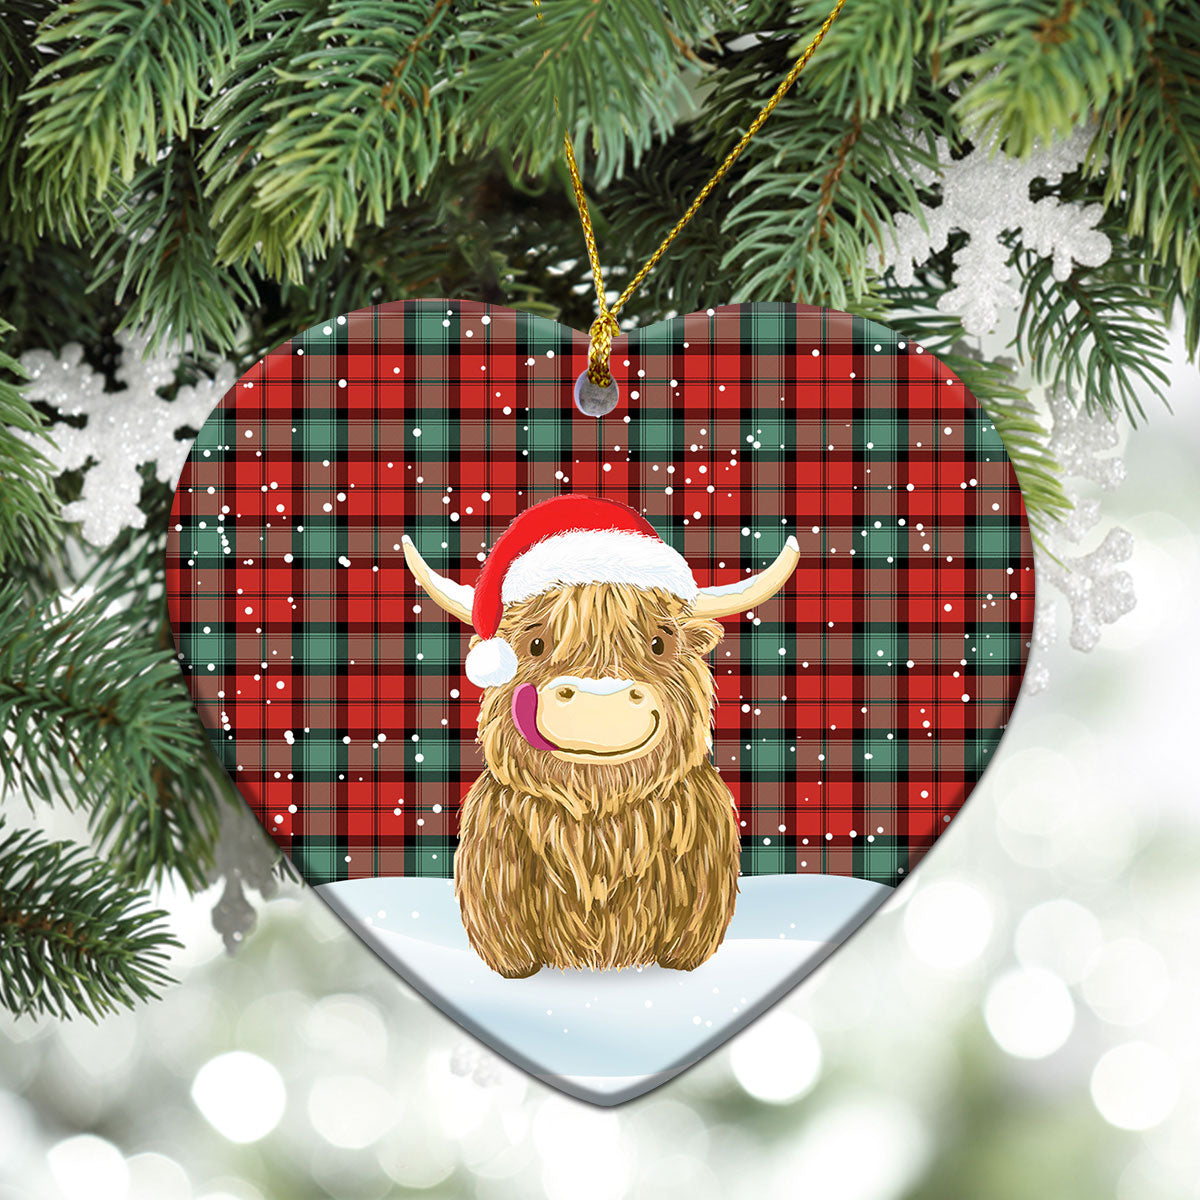 Kerr Ancient Tartan Christmas Ceramic Ornament - Highland Cows Style